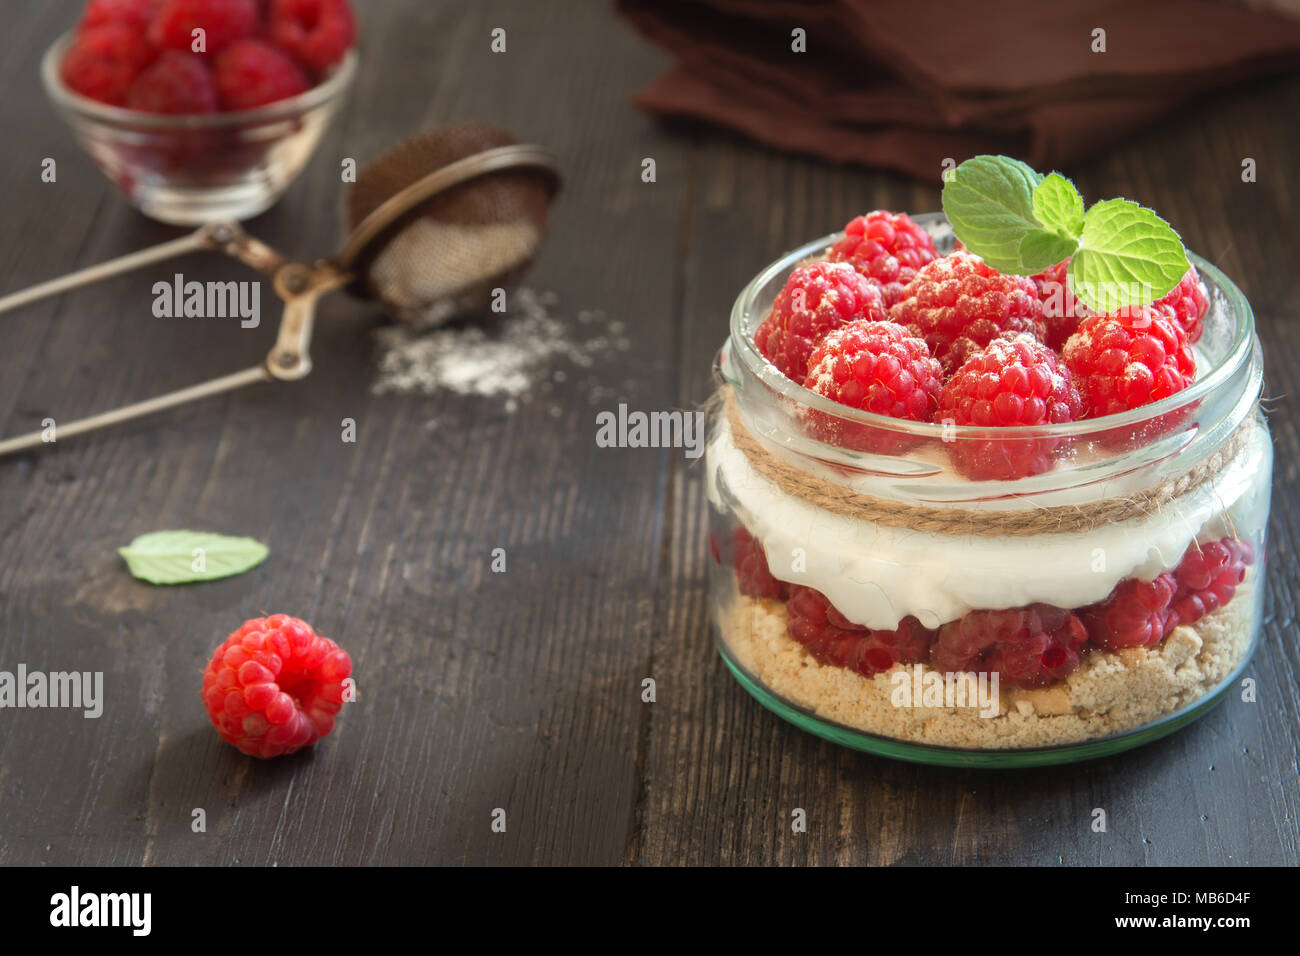 Raspberry cheesecake dessert in glass jar with fresh raspberries and cream cheese on wooden background. Healthy homemade summer berry layered dessert. Stock Photo